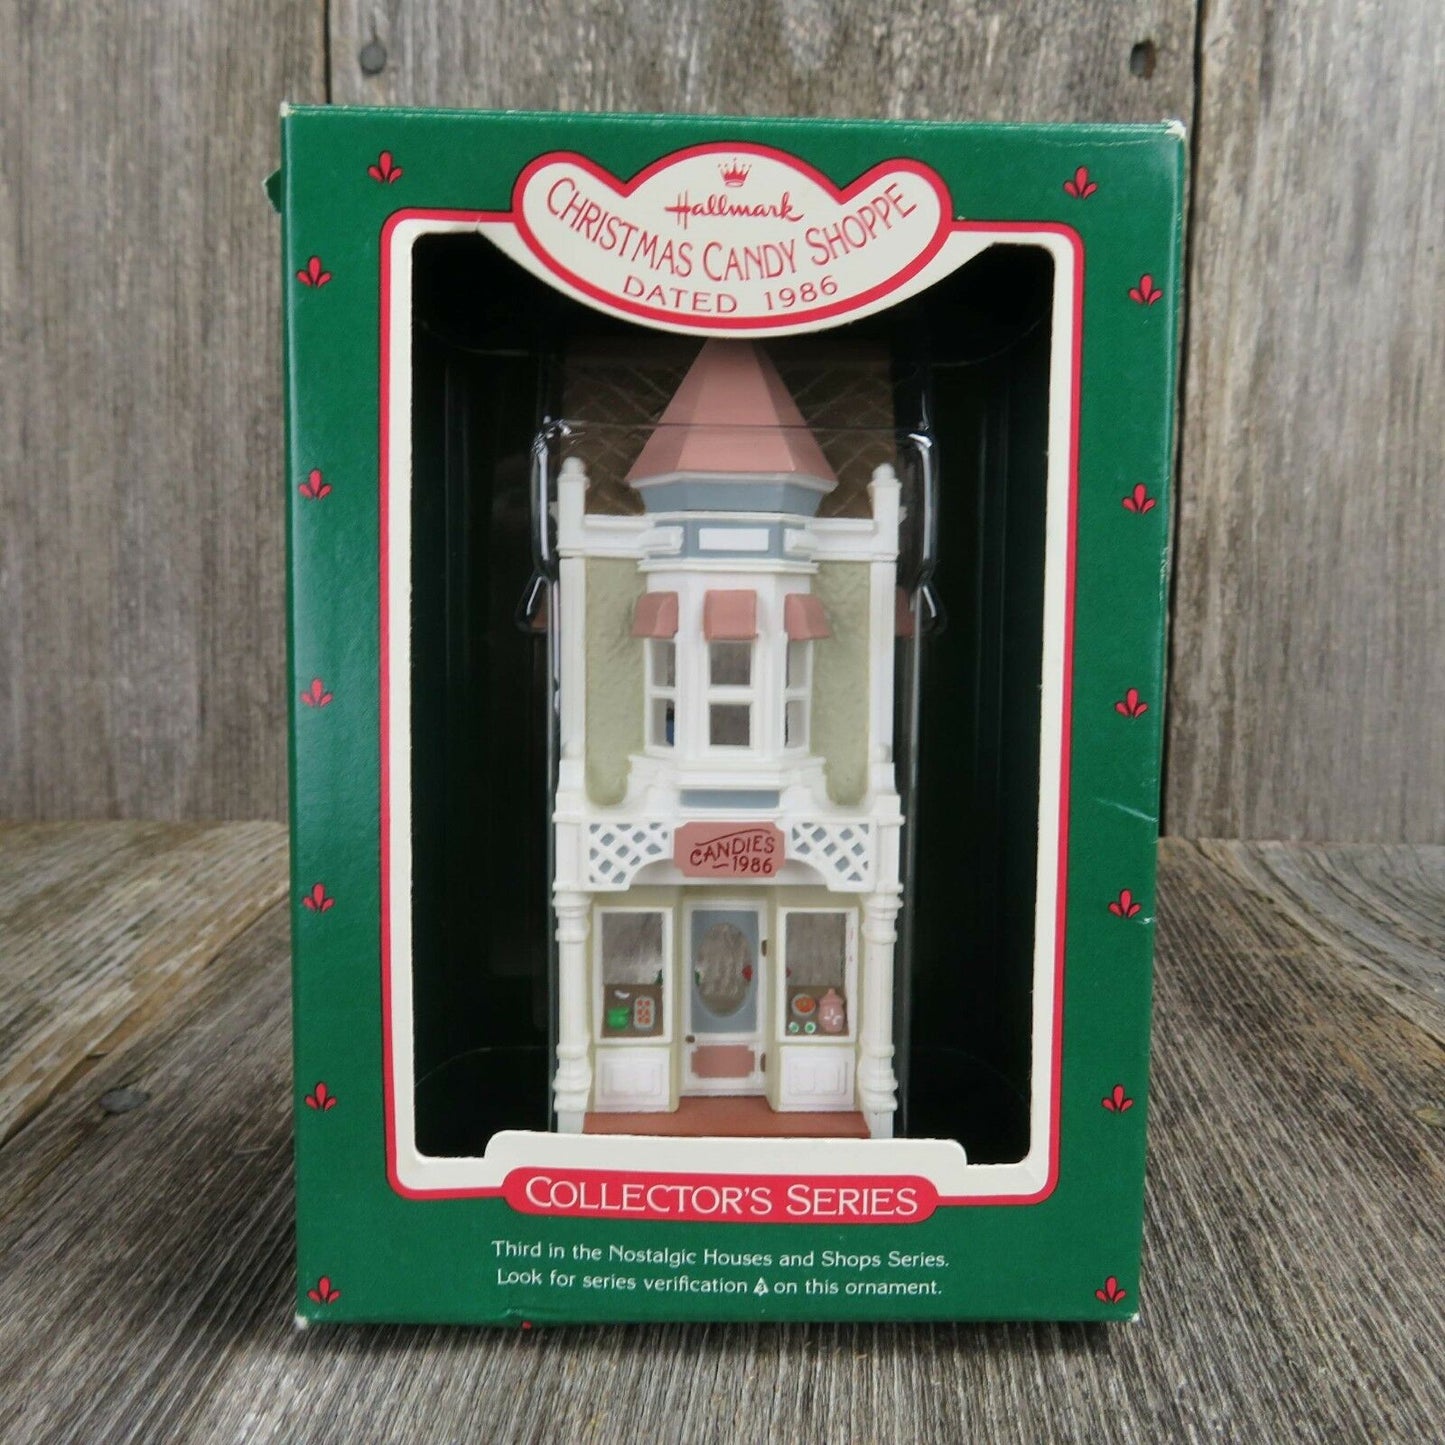 Vintage Christmas Candy Shoppe Ornament Hallmark Nostalgic Houses Shops Village - At Grandma's Table